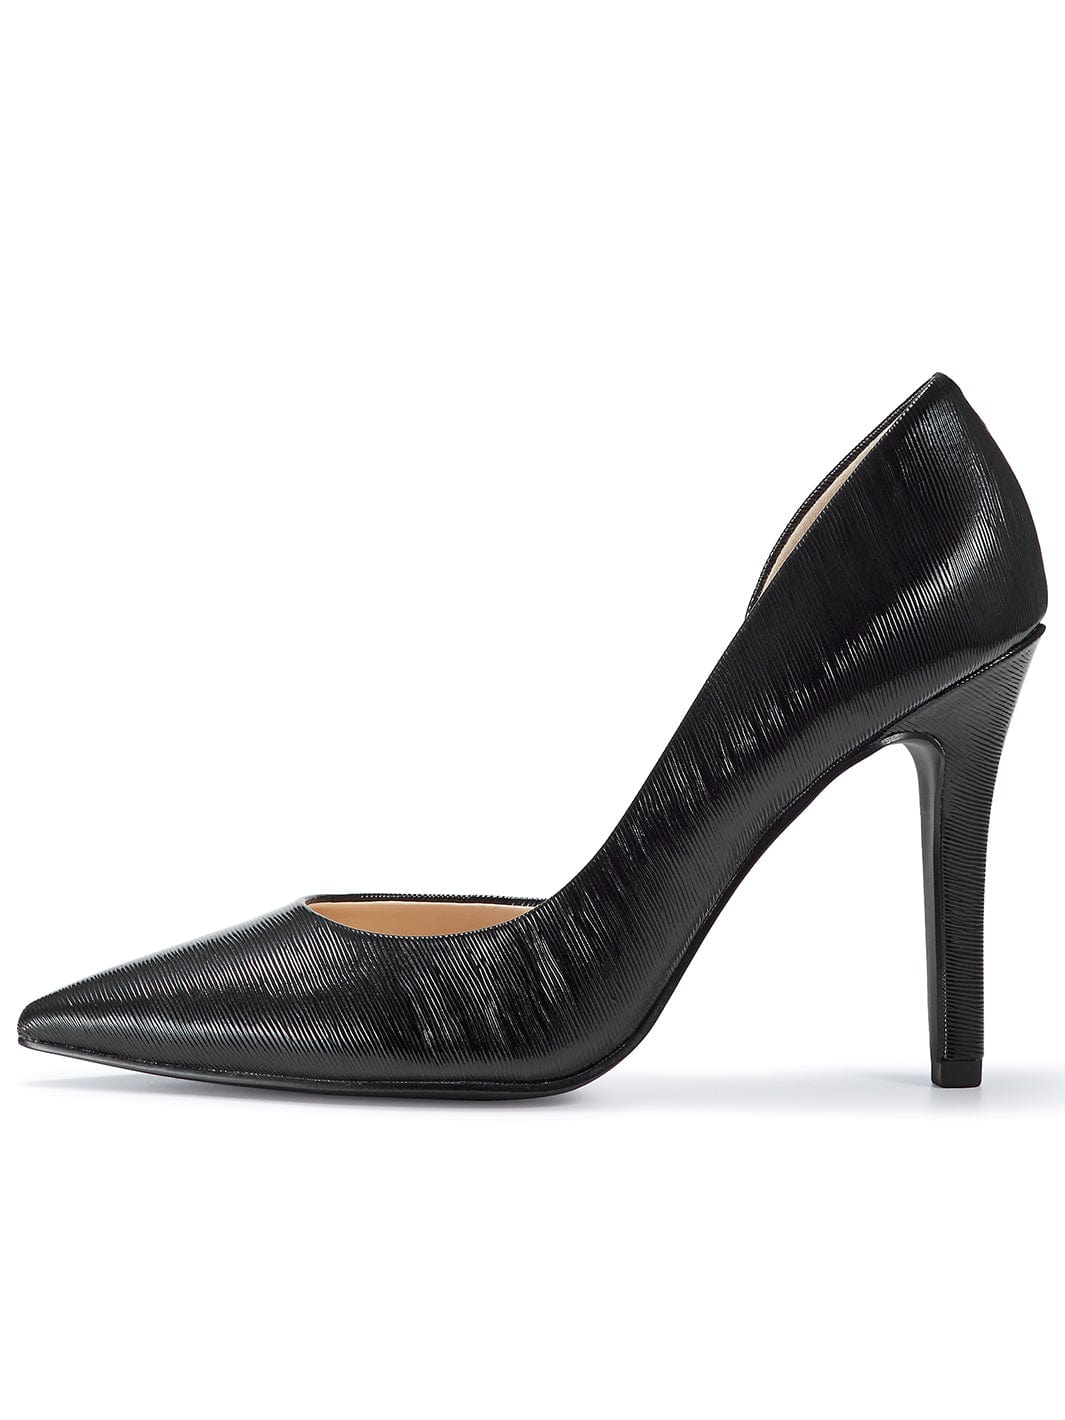 JENN ARDOR Women Dress Pointed Toe Stiletto Heel Pumps#color_p-black